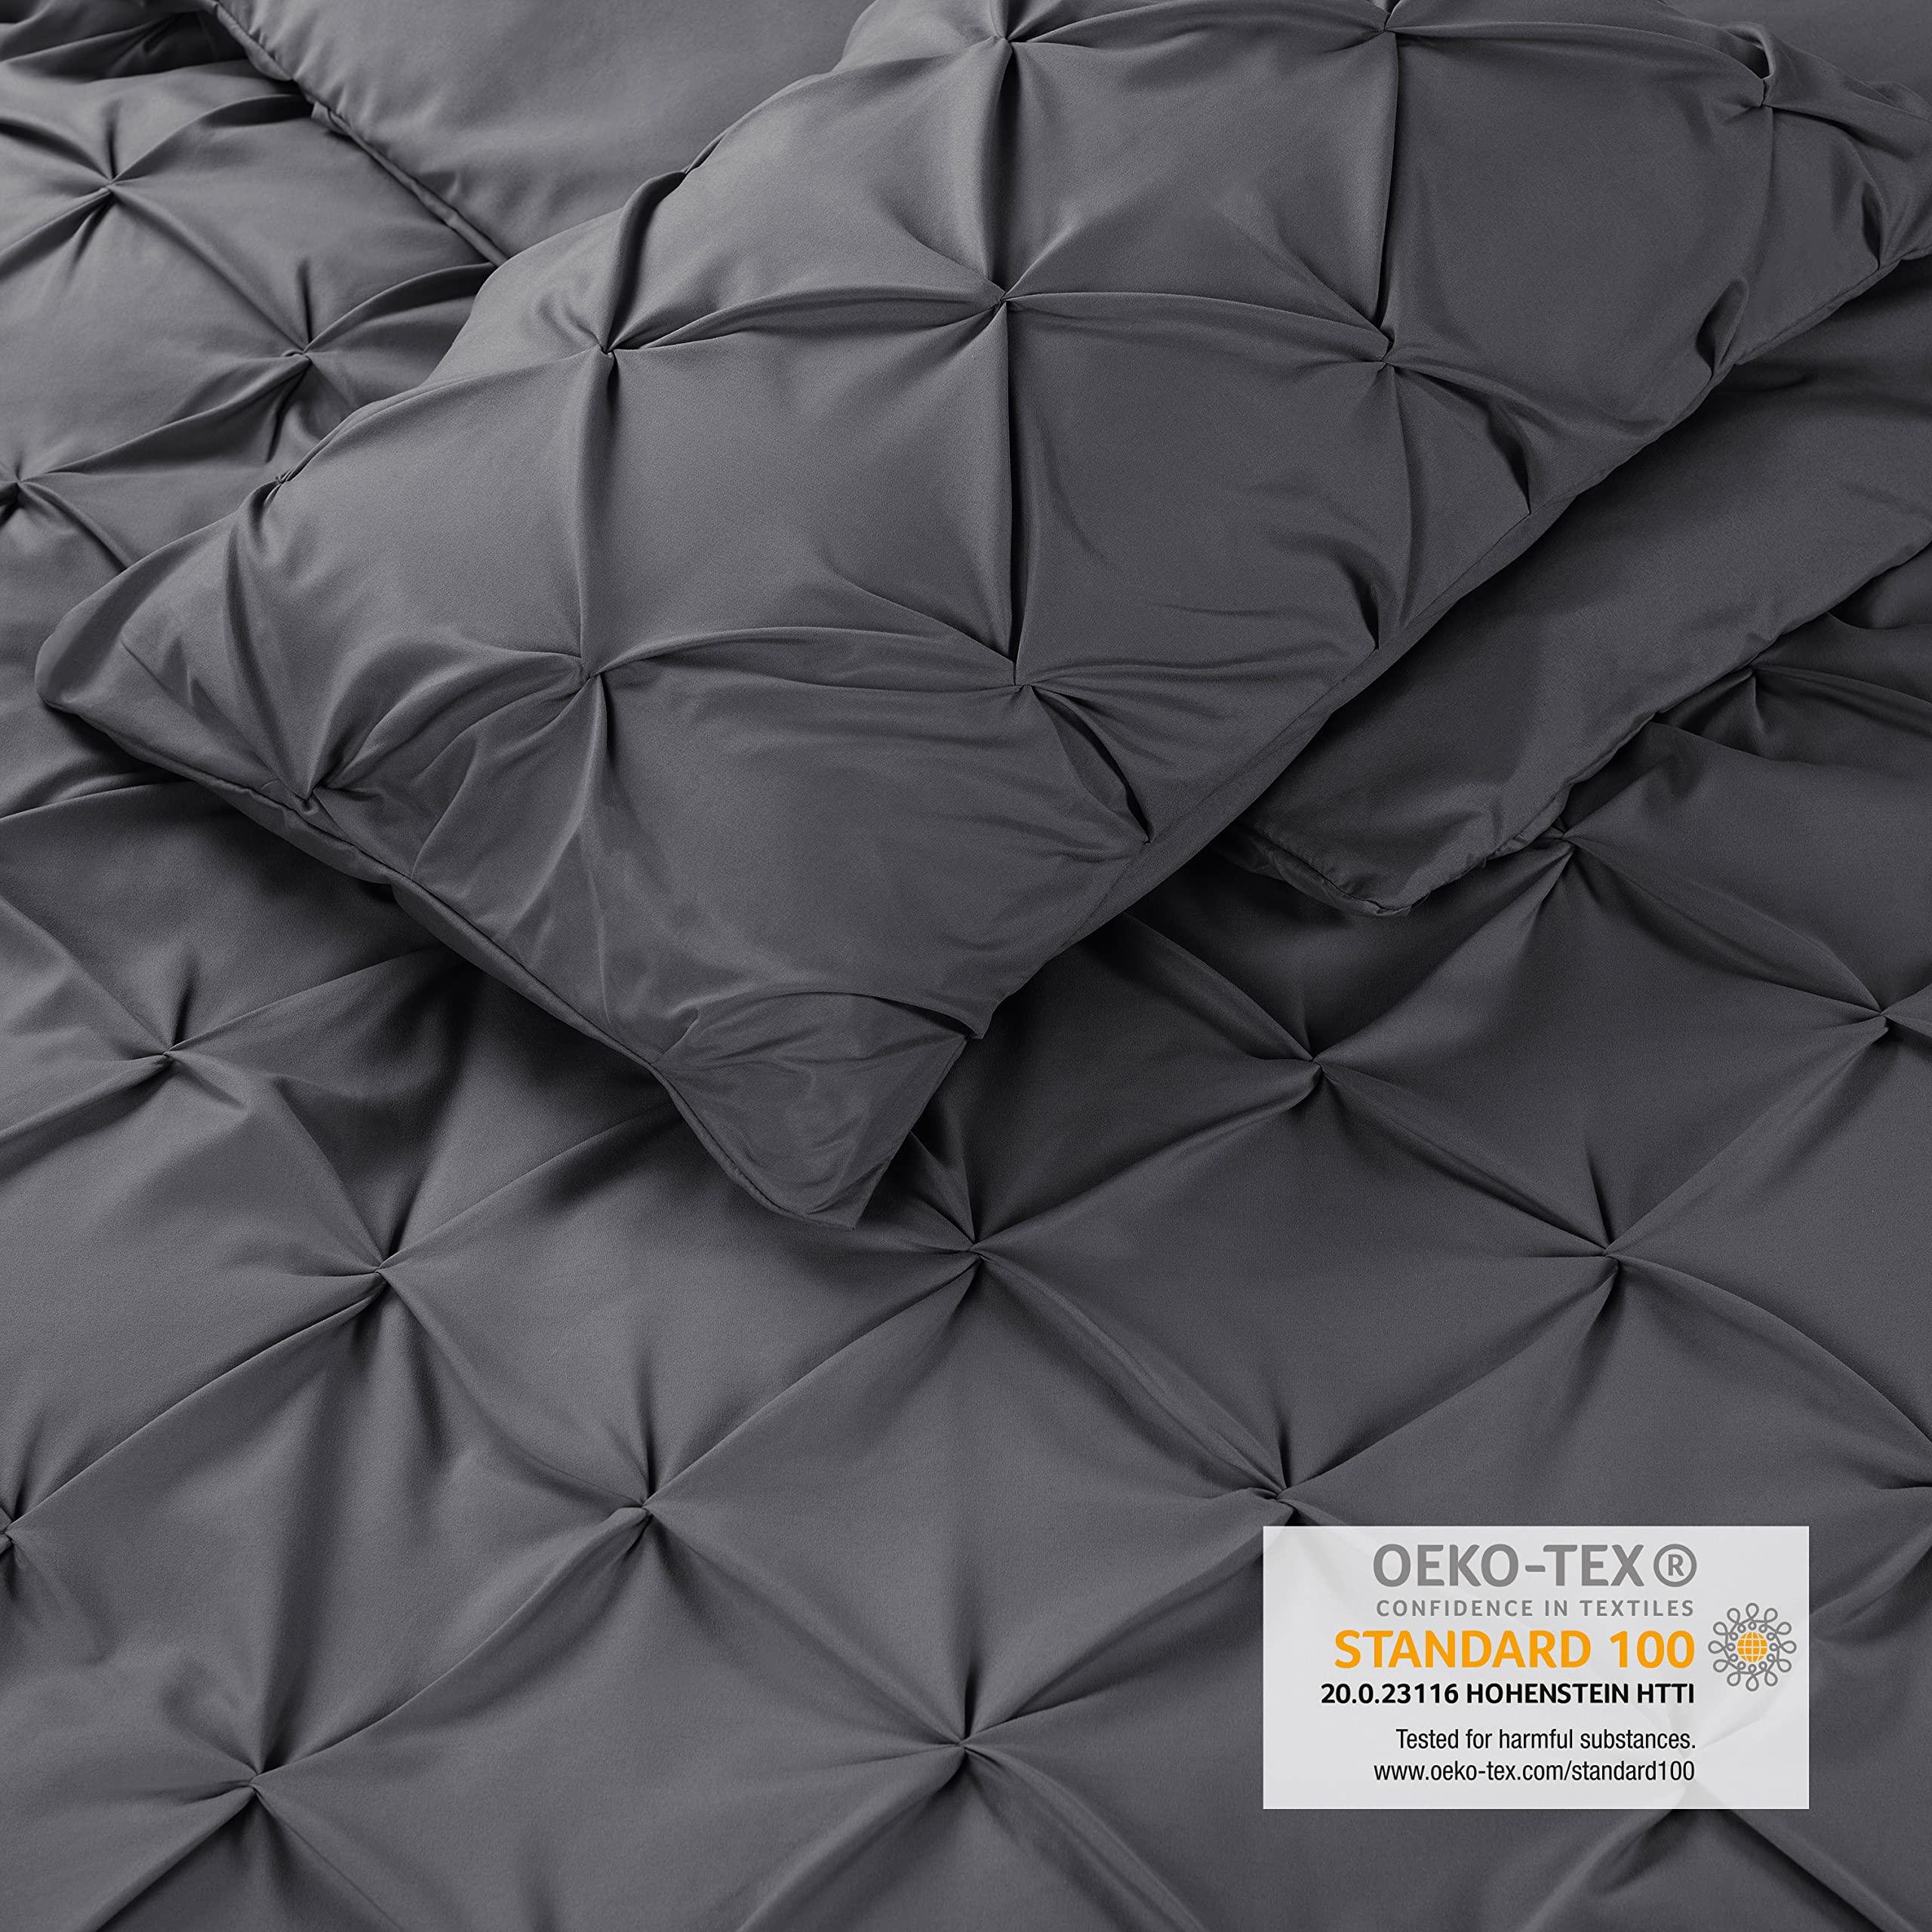 Blumtal® Luxury Duvet Cover Set Pinch Pleat, UltraSoft Super King Bedding with Beautiful Tucks, 260 x 220 & 50 x 75 cm (2x), Pintuck Bedding, Anthracite 7